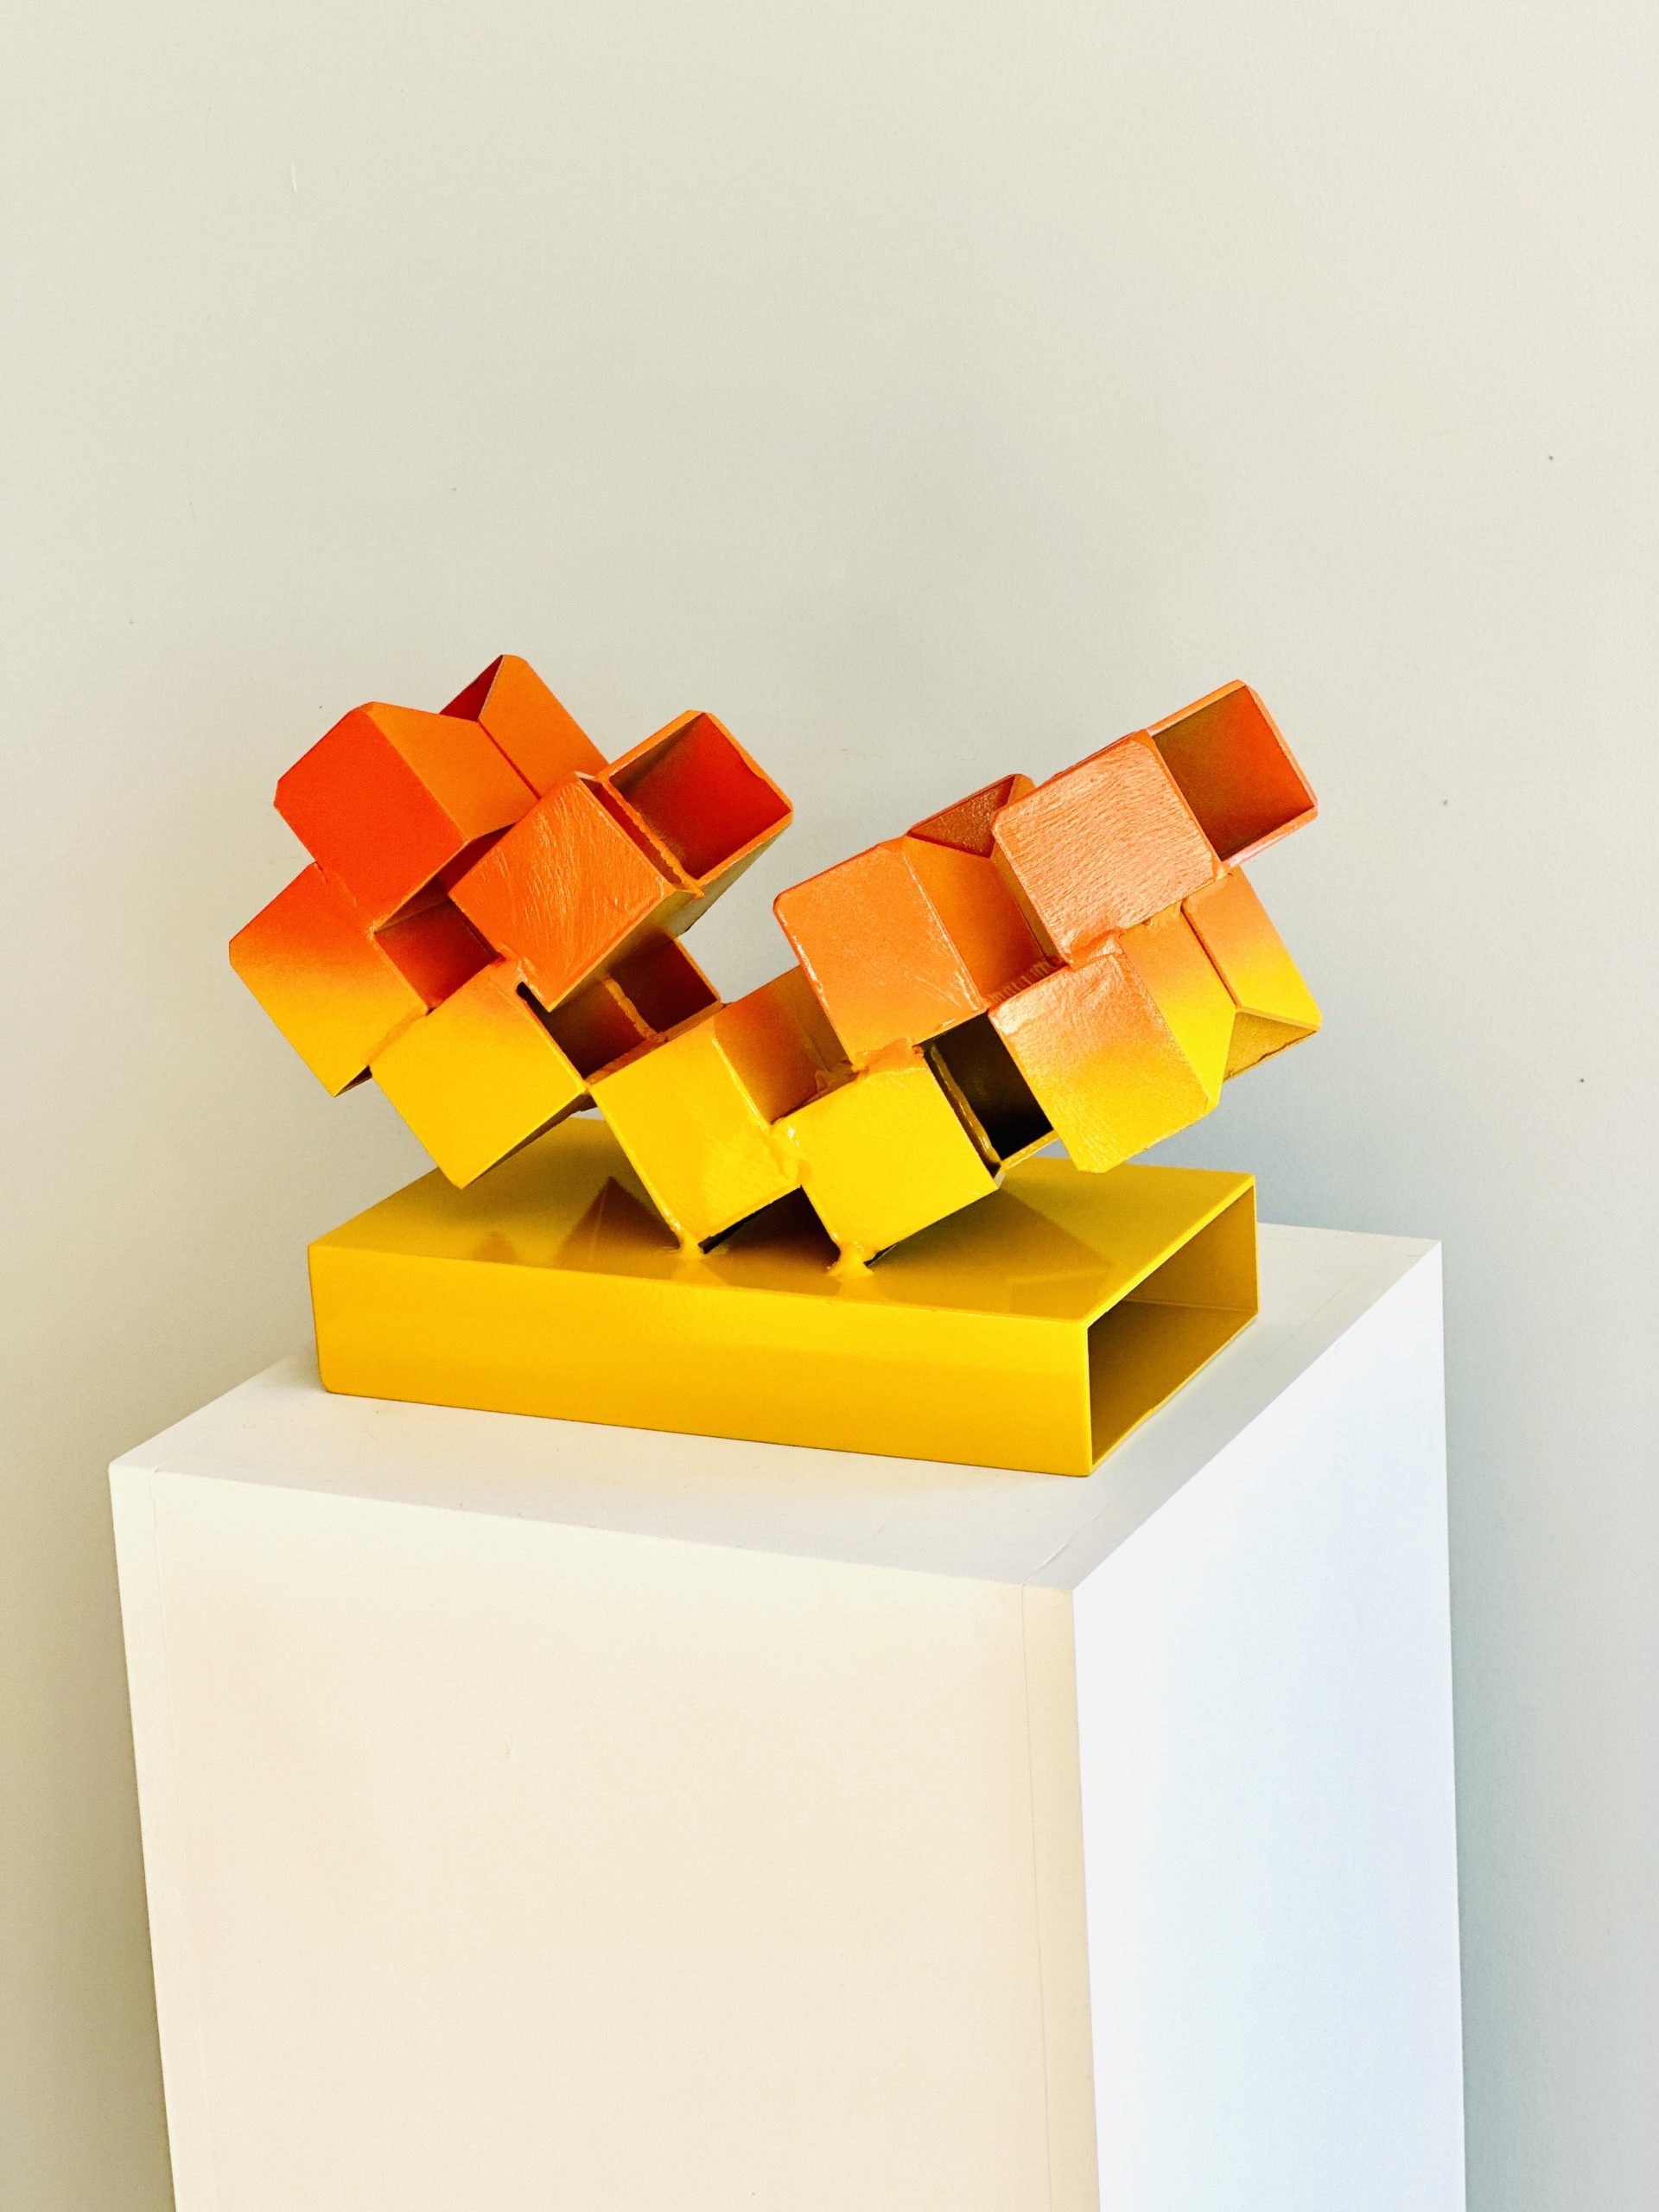 Cubi Sculpture